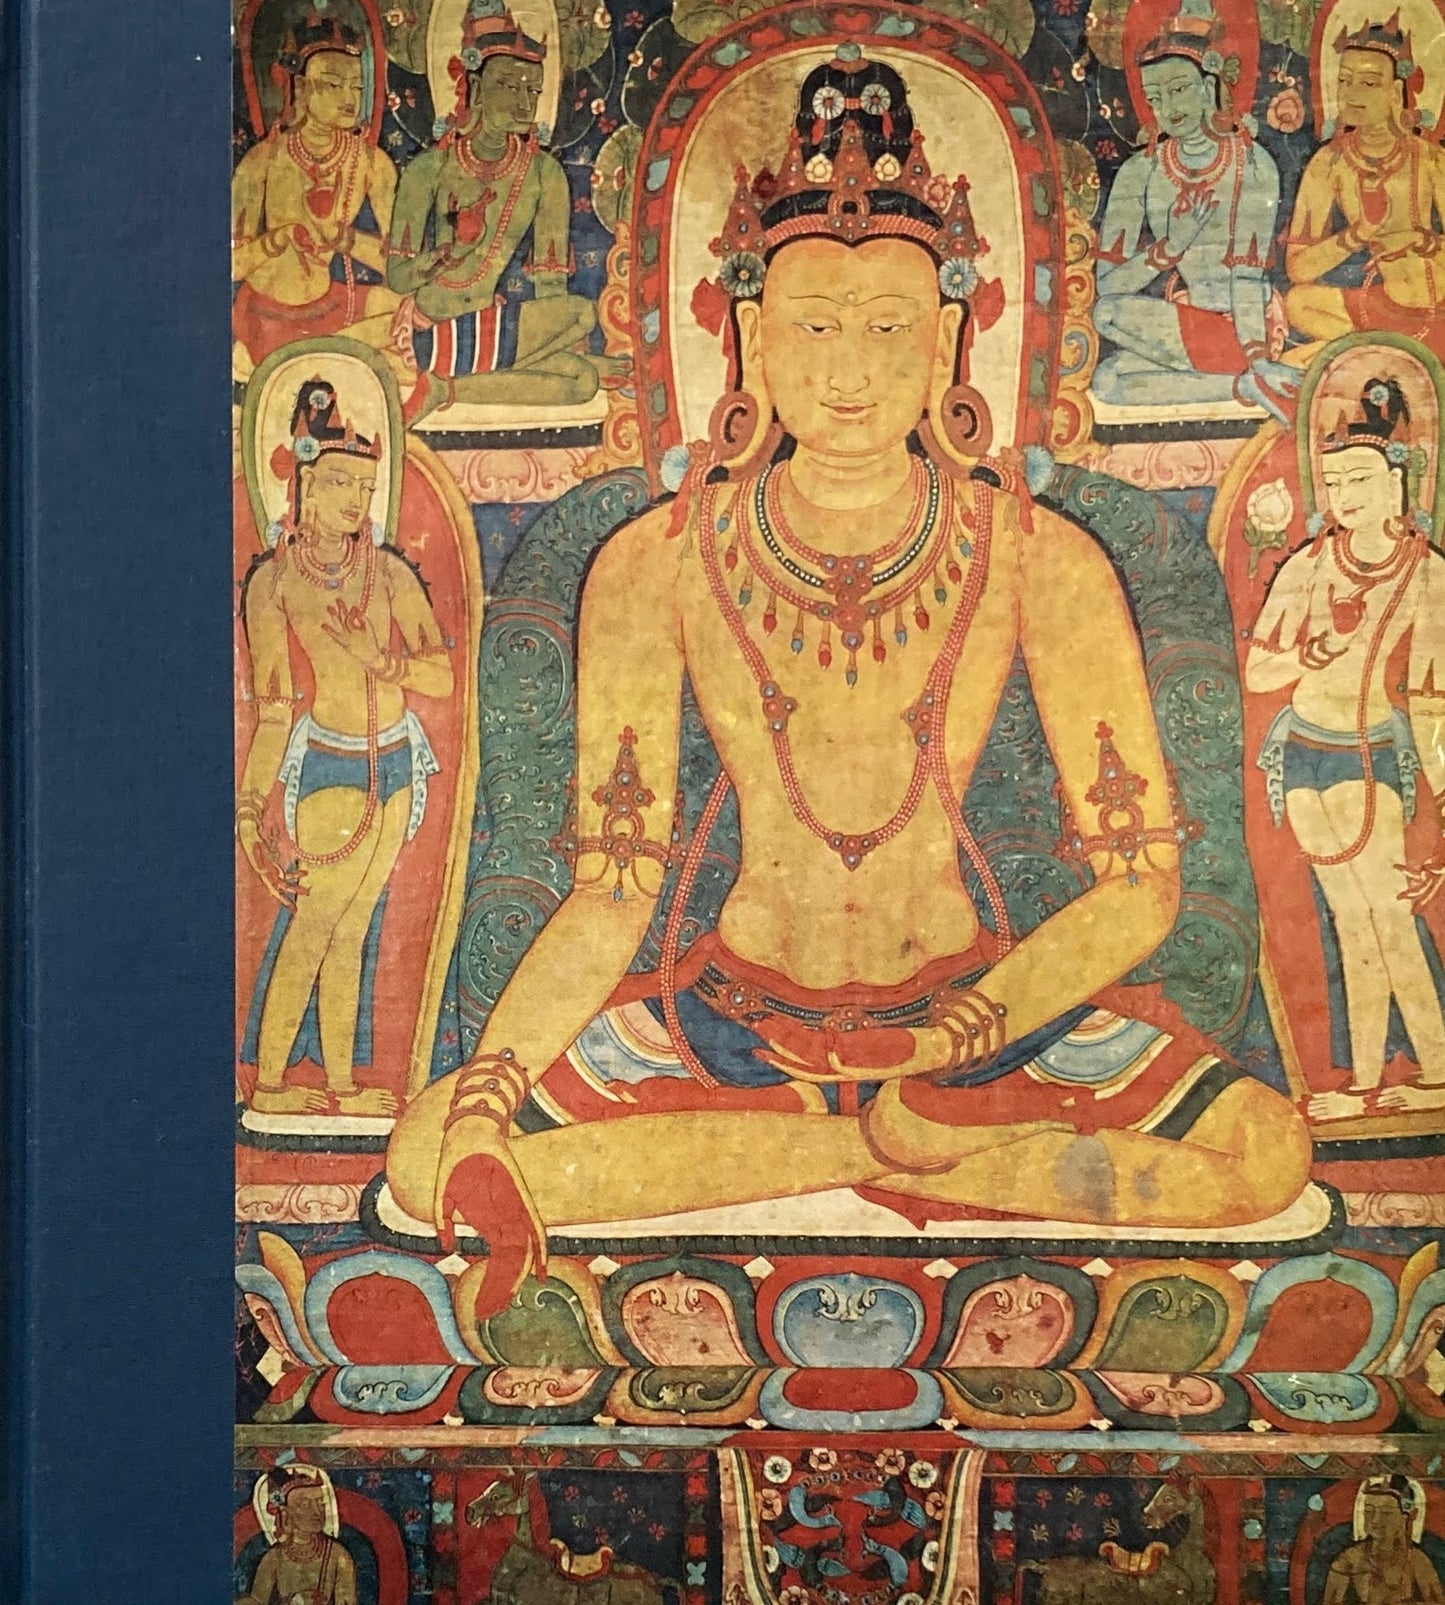 The Evolution of the Buddha Image